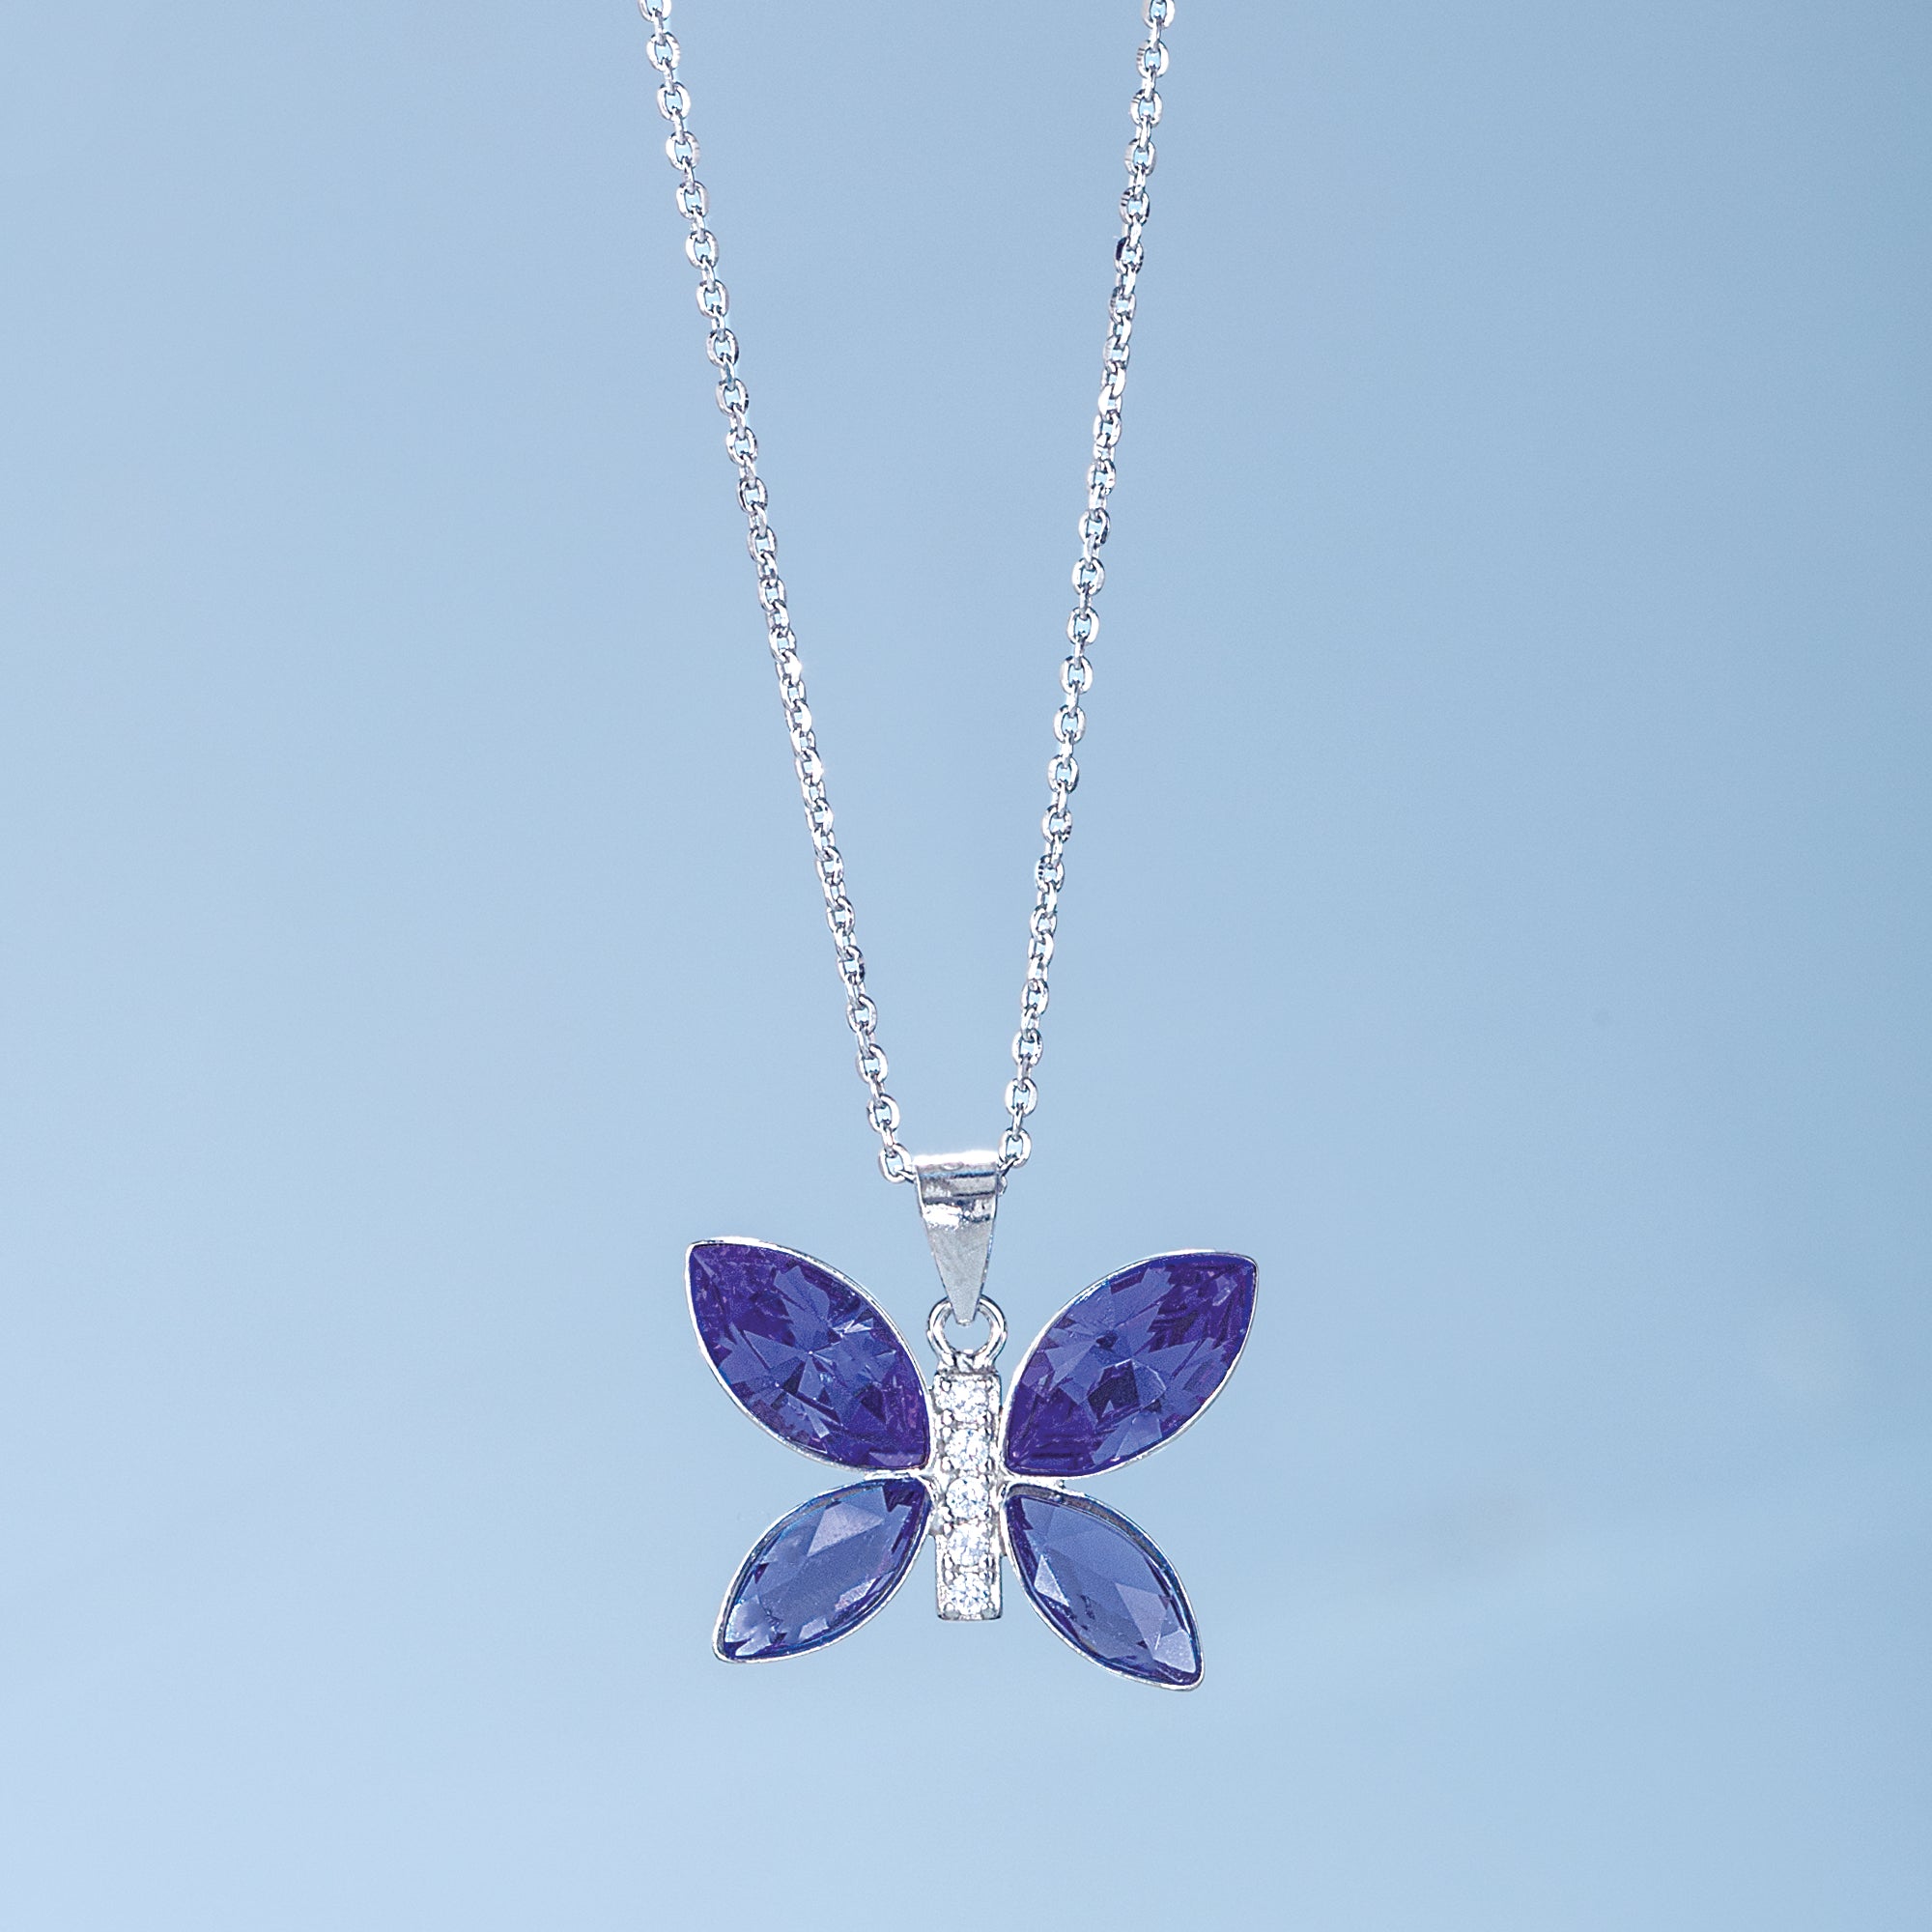 Blue Crystal Butterfly Necklace & Earrings Set